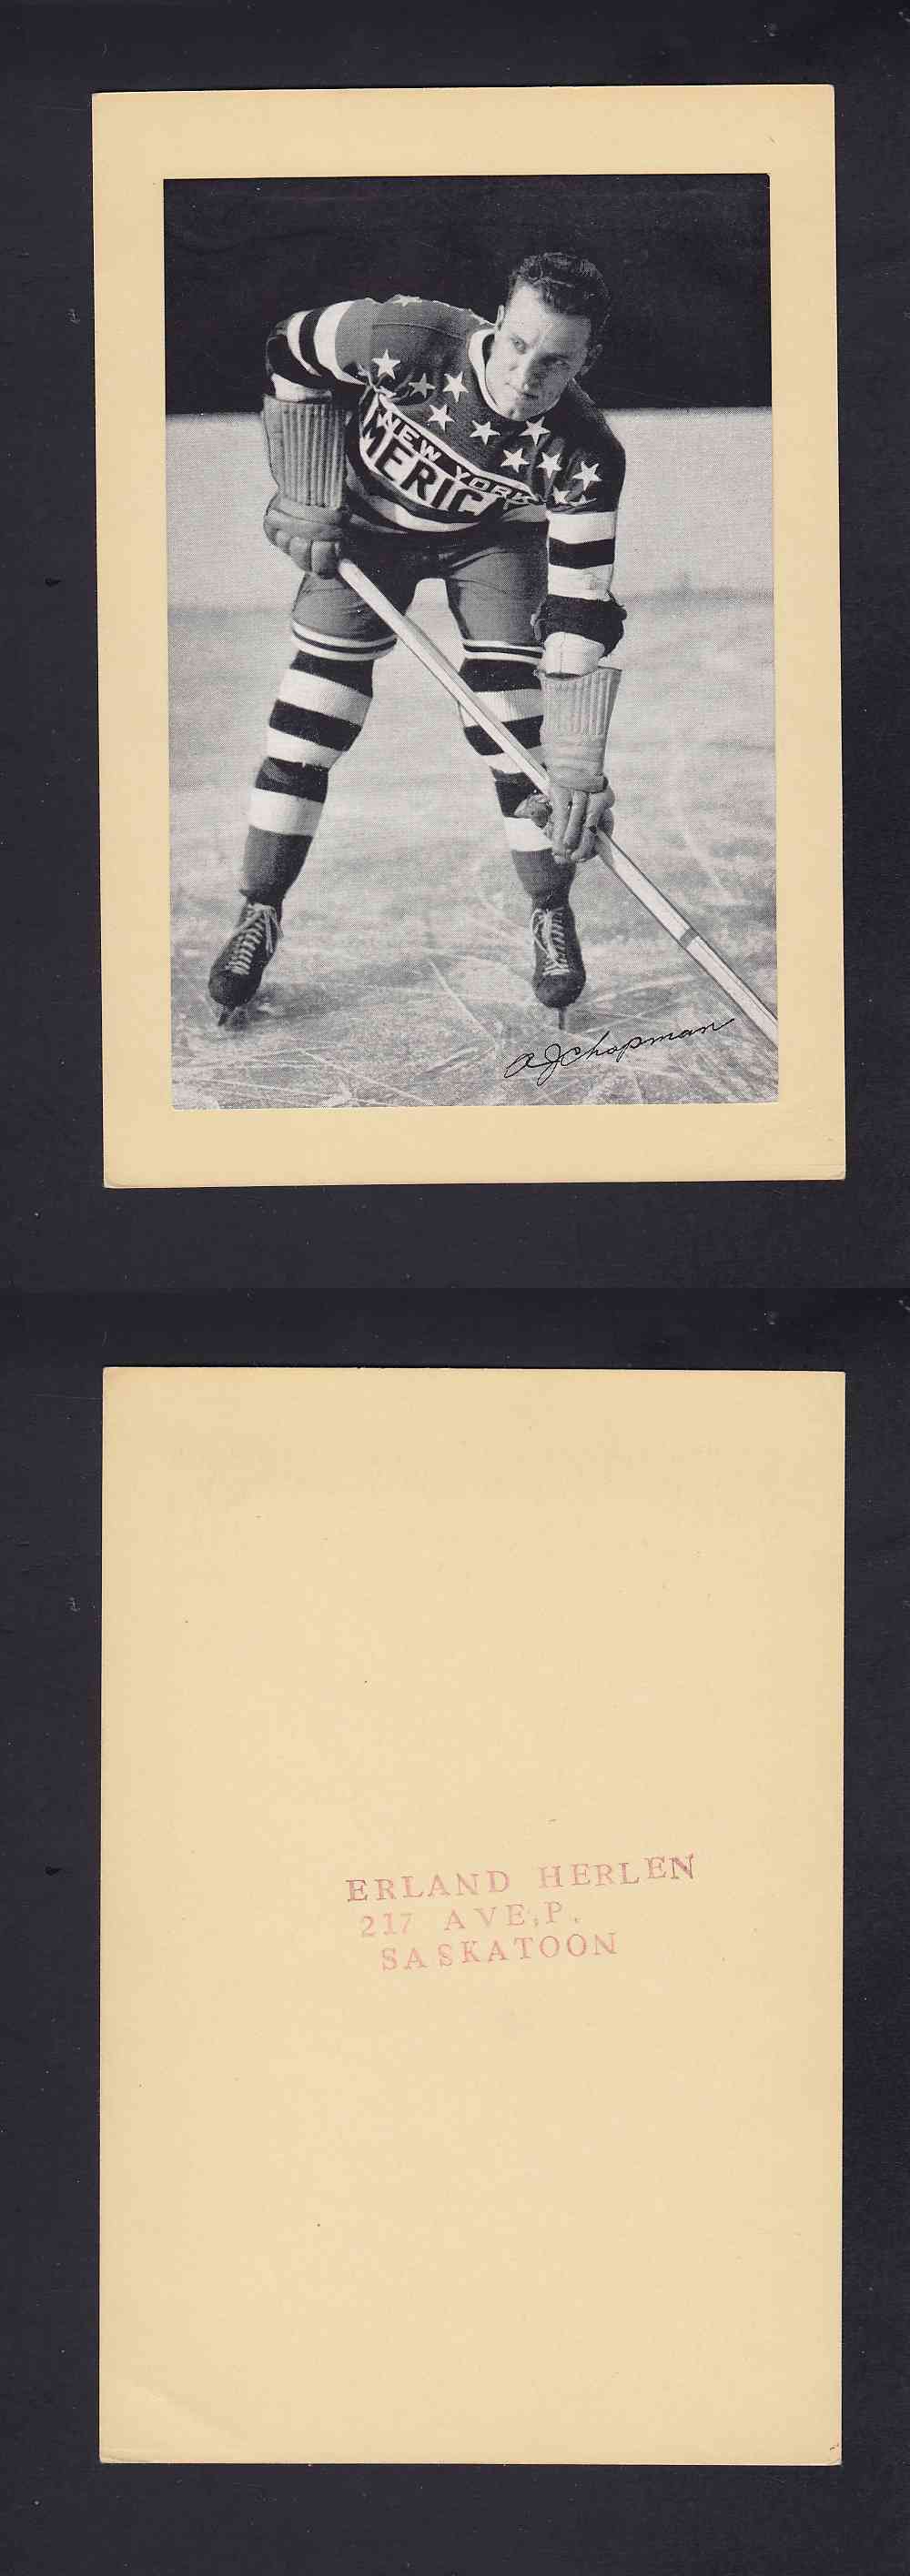 1934-43 BEEHIVE PHOTO GR.1 A. CHAPMAN photo